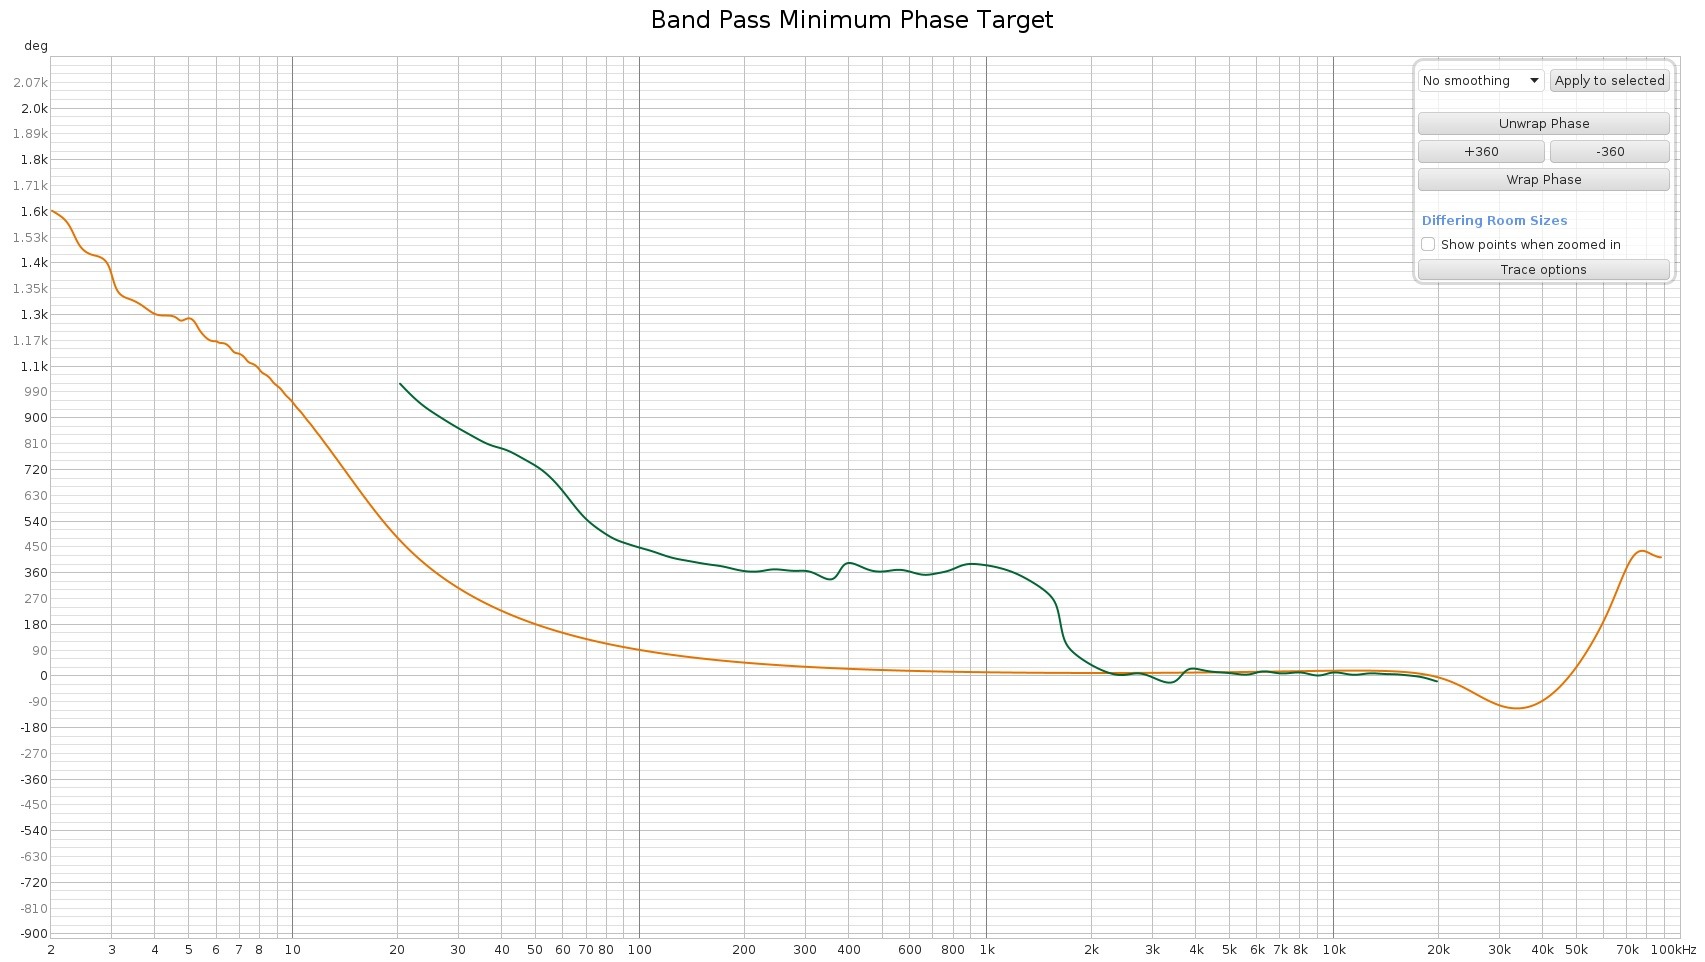 Minimum Phase Band Pass Target Phase.jpg